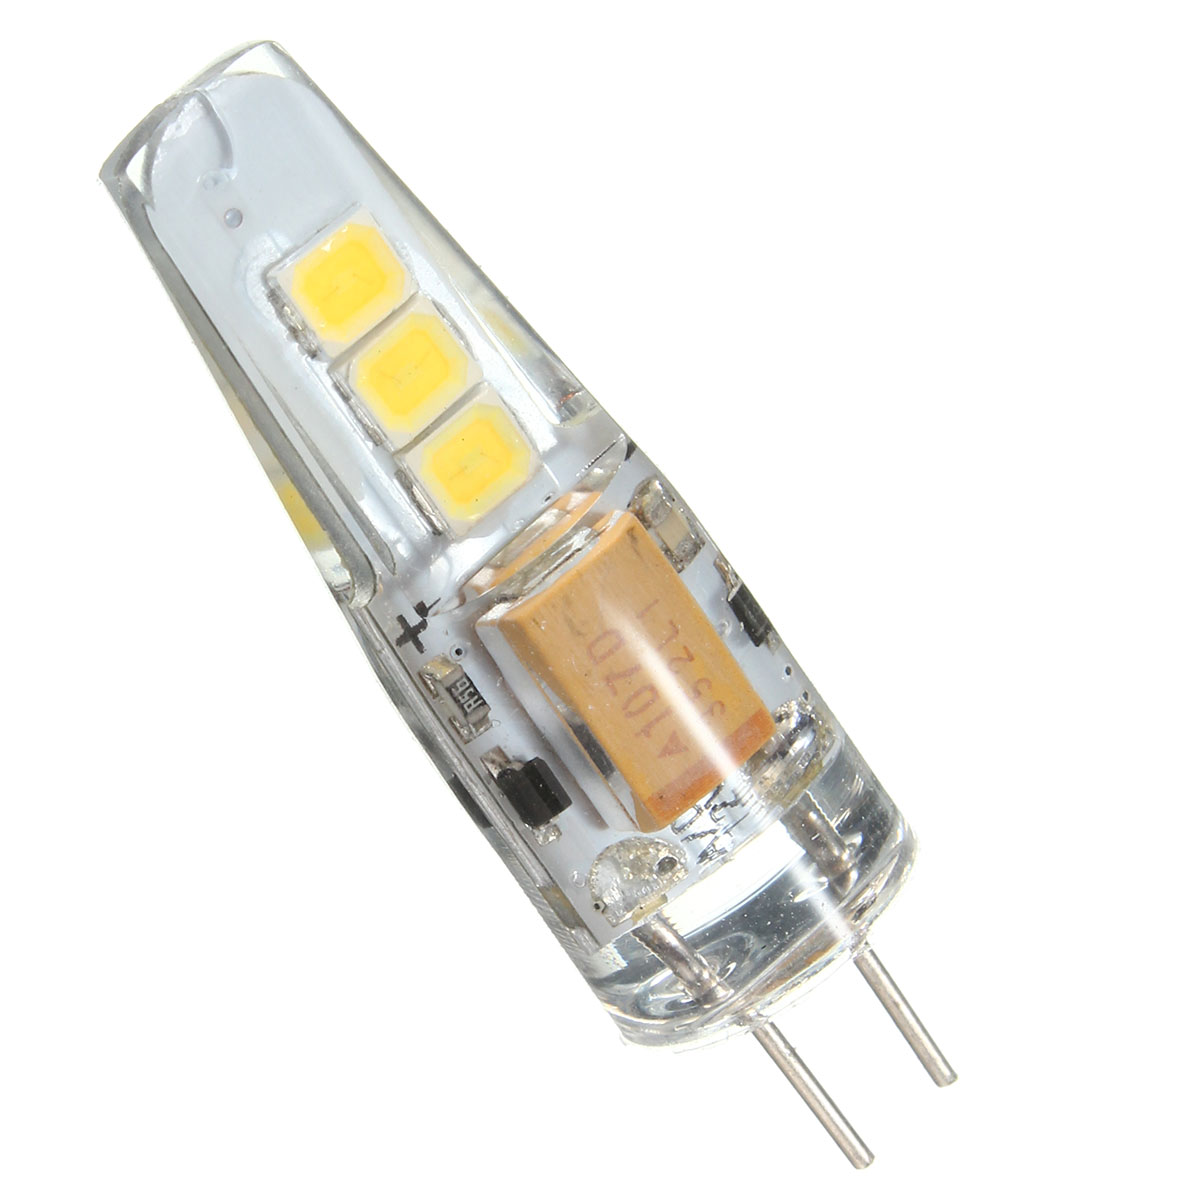 Mini-G4-LED-Corn-Bulb-2W-6-SMD-2835-Silicone-Crystal-Lamp-Light-DC12V-1065960-10